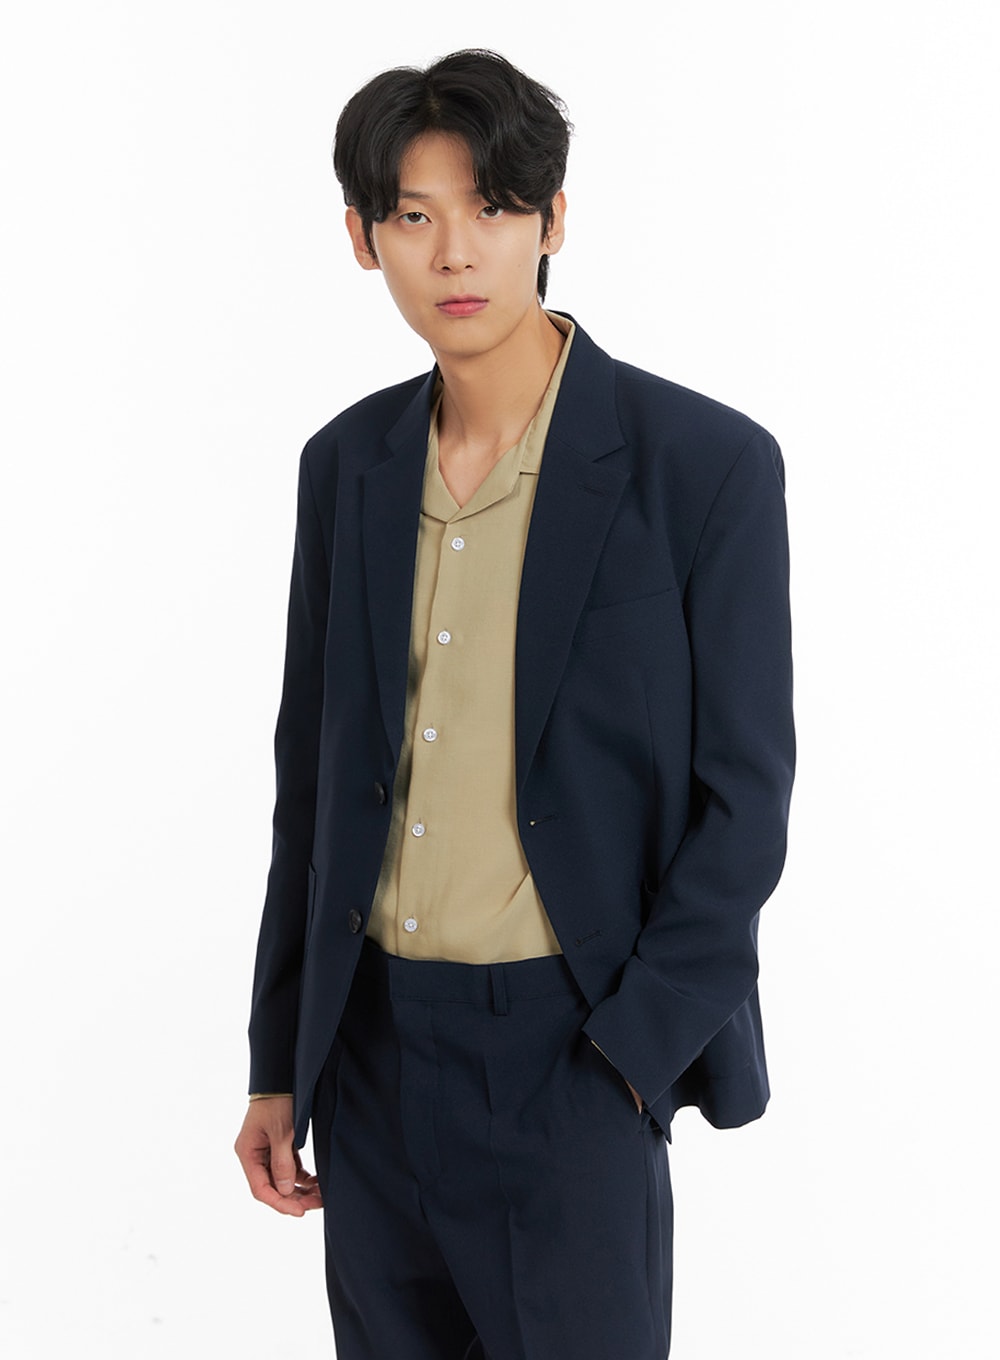 mens-basic-suit-jacket-ia401 / Dark blue